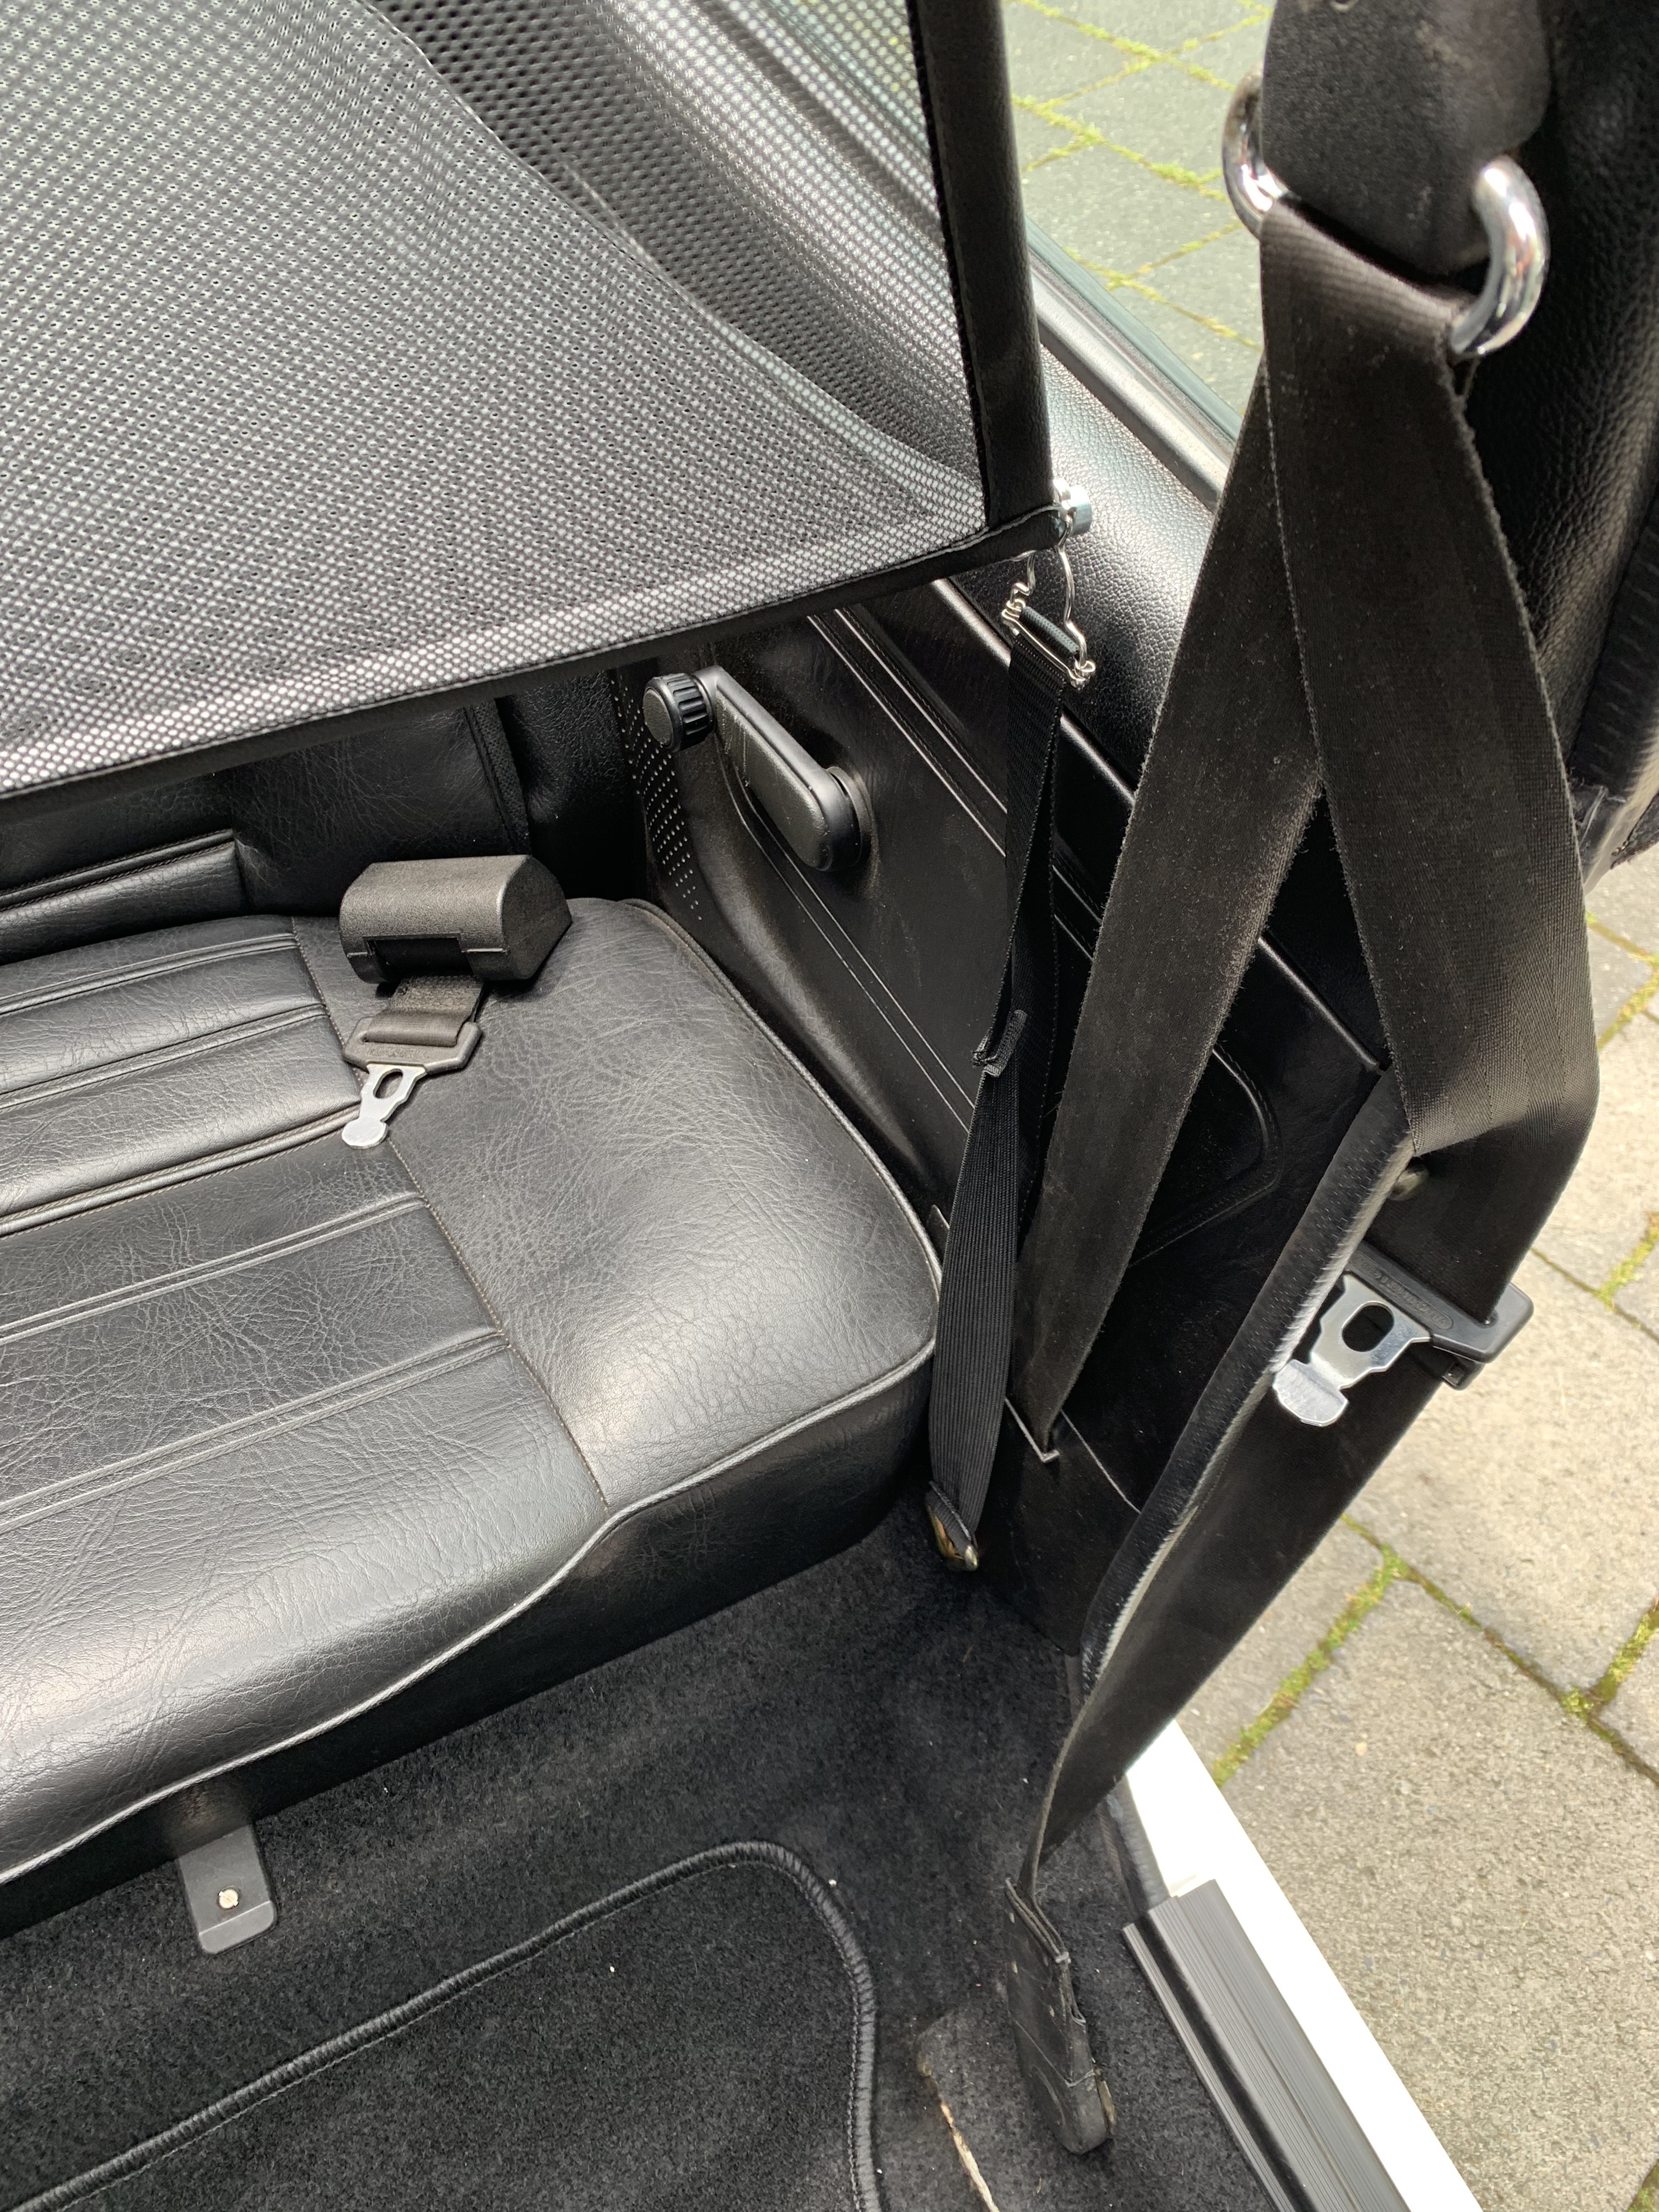 Cinghie di tensione AIRAX per deflettore vento VW Golf I 2 pezzi